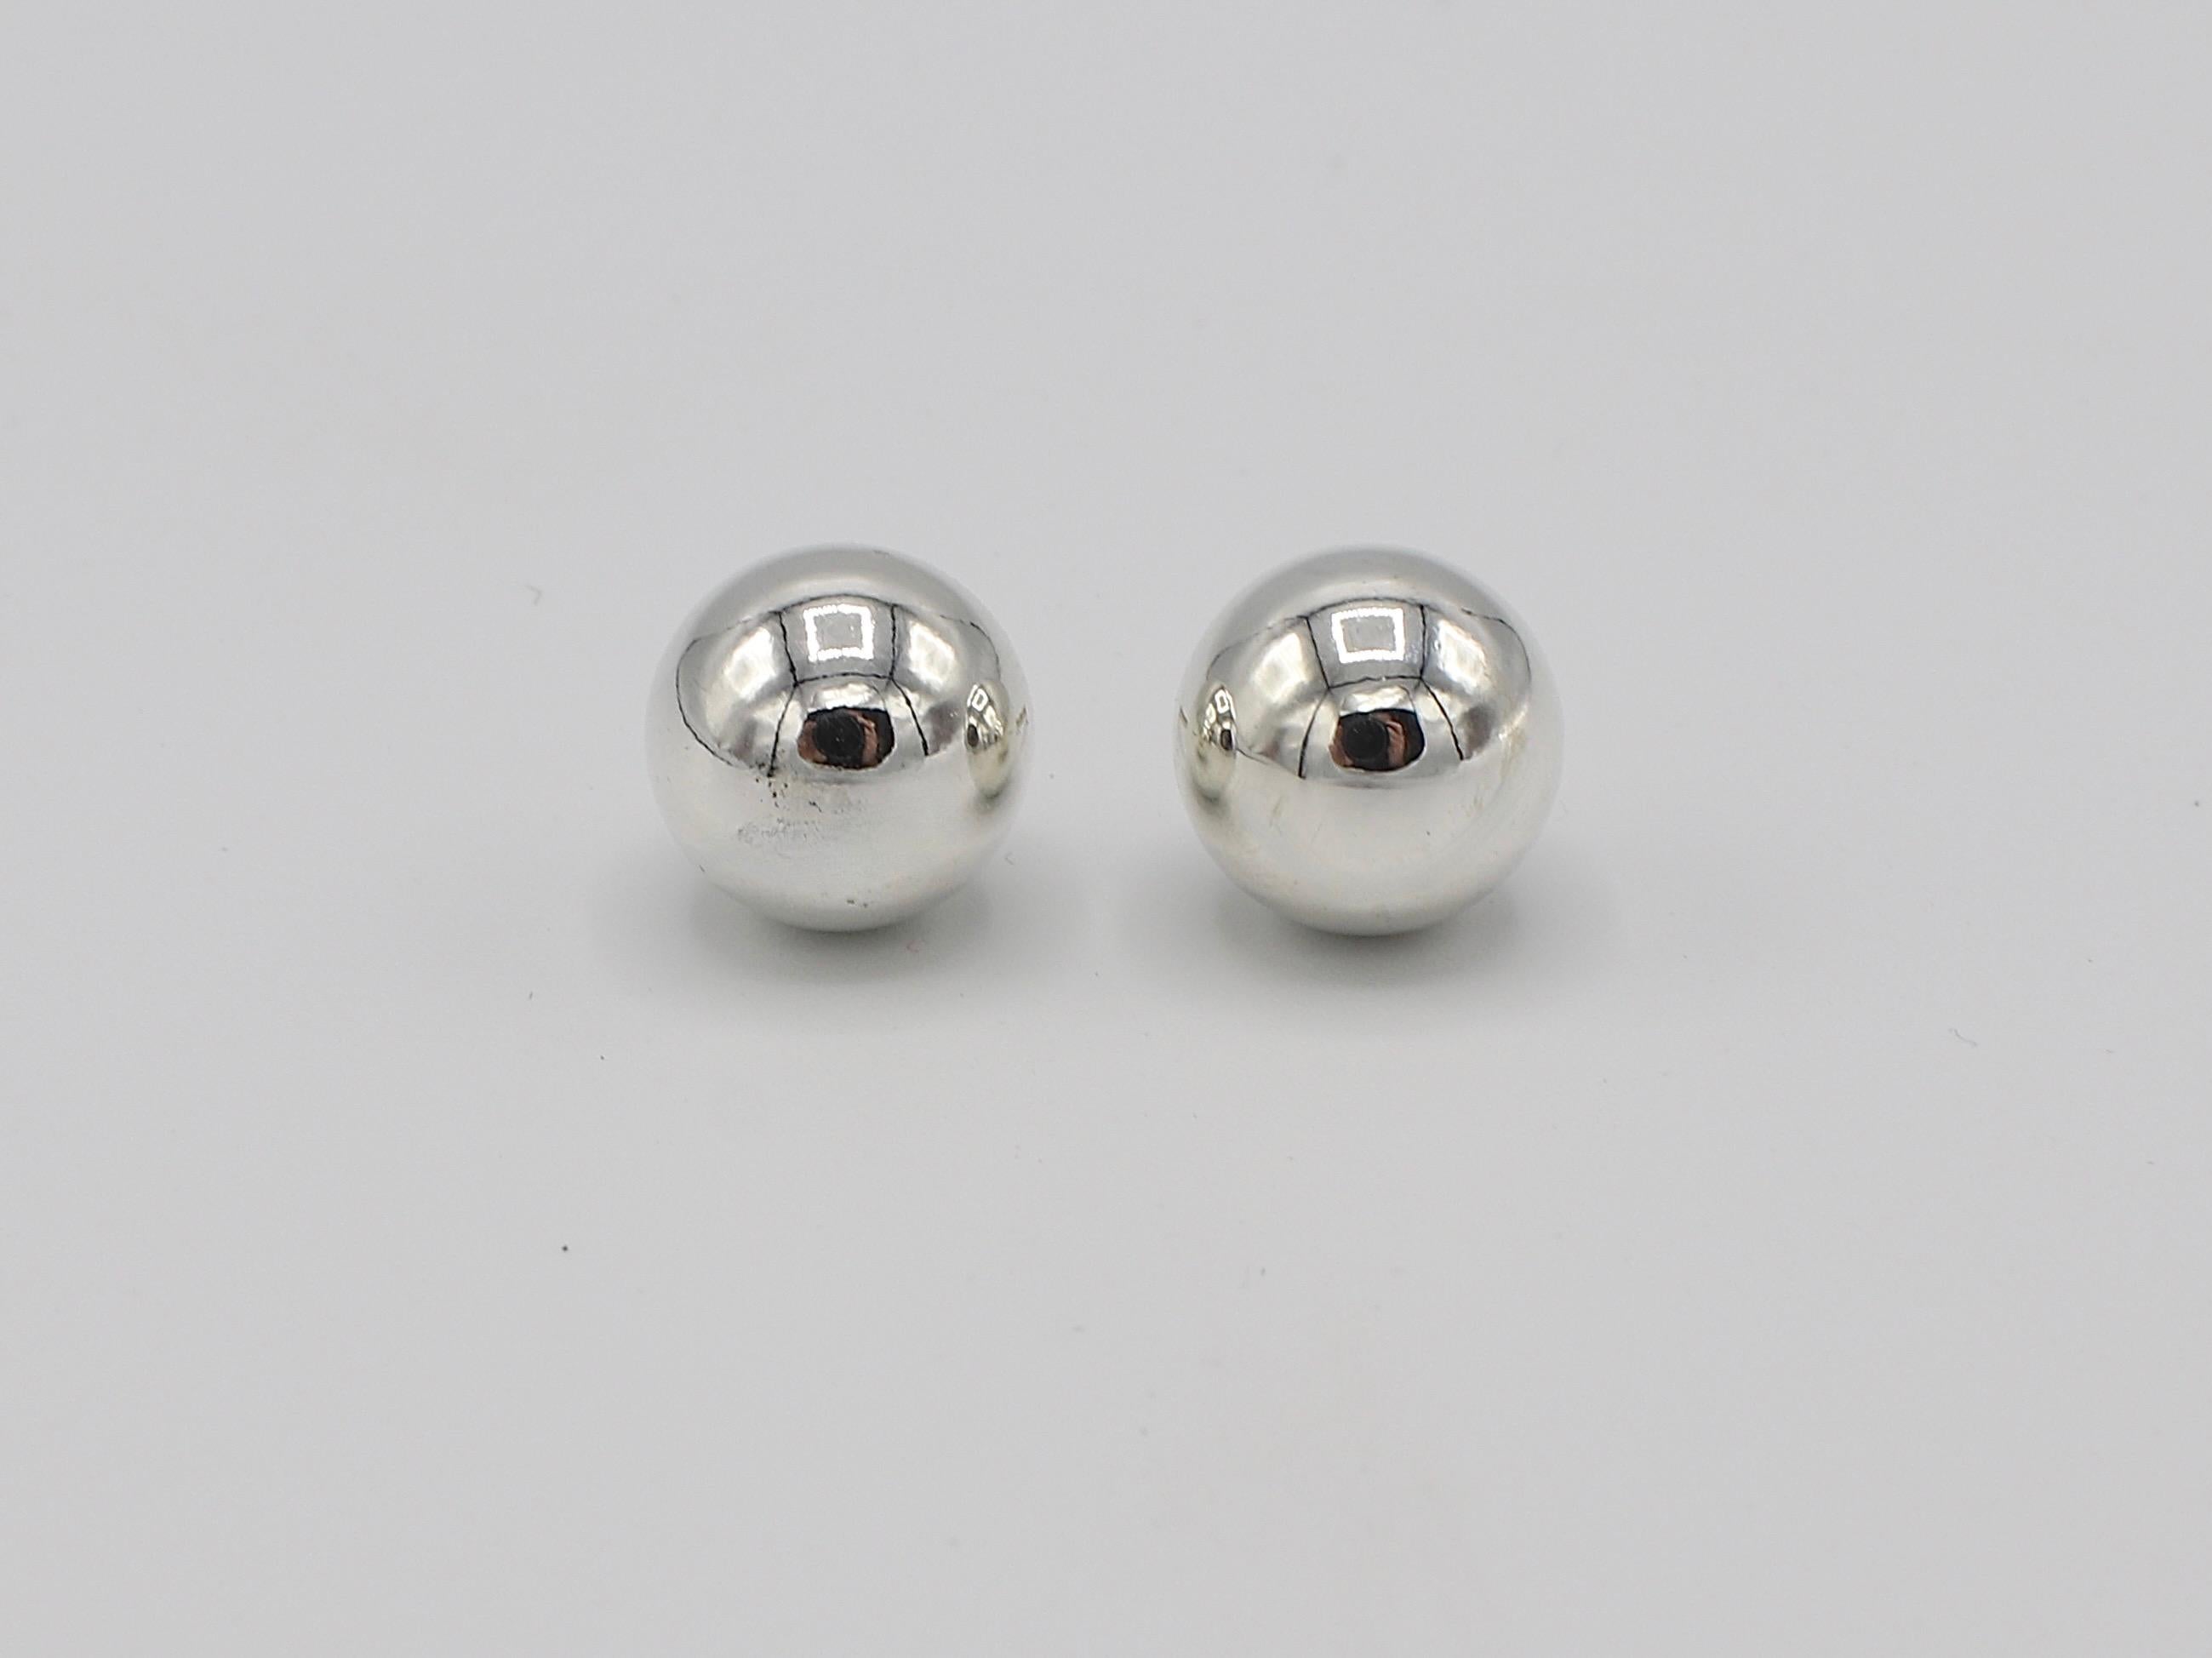 Tiffany & Co. HardWear Sterling Silver 10mm Ball Stud Earrings 

Metal: Sterling Silver
Weight: 4.5 grams
Ball diameter: 10mm
Signed 